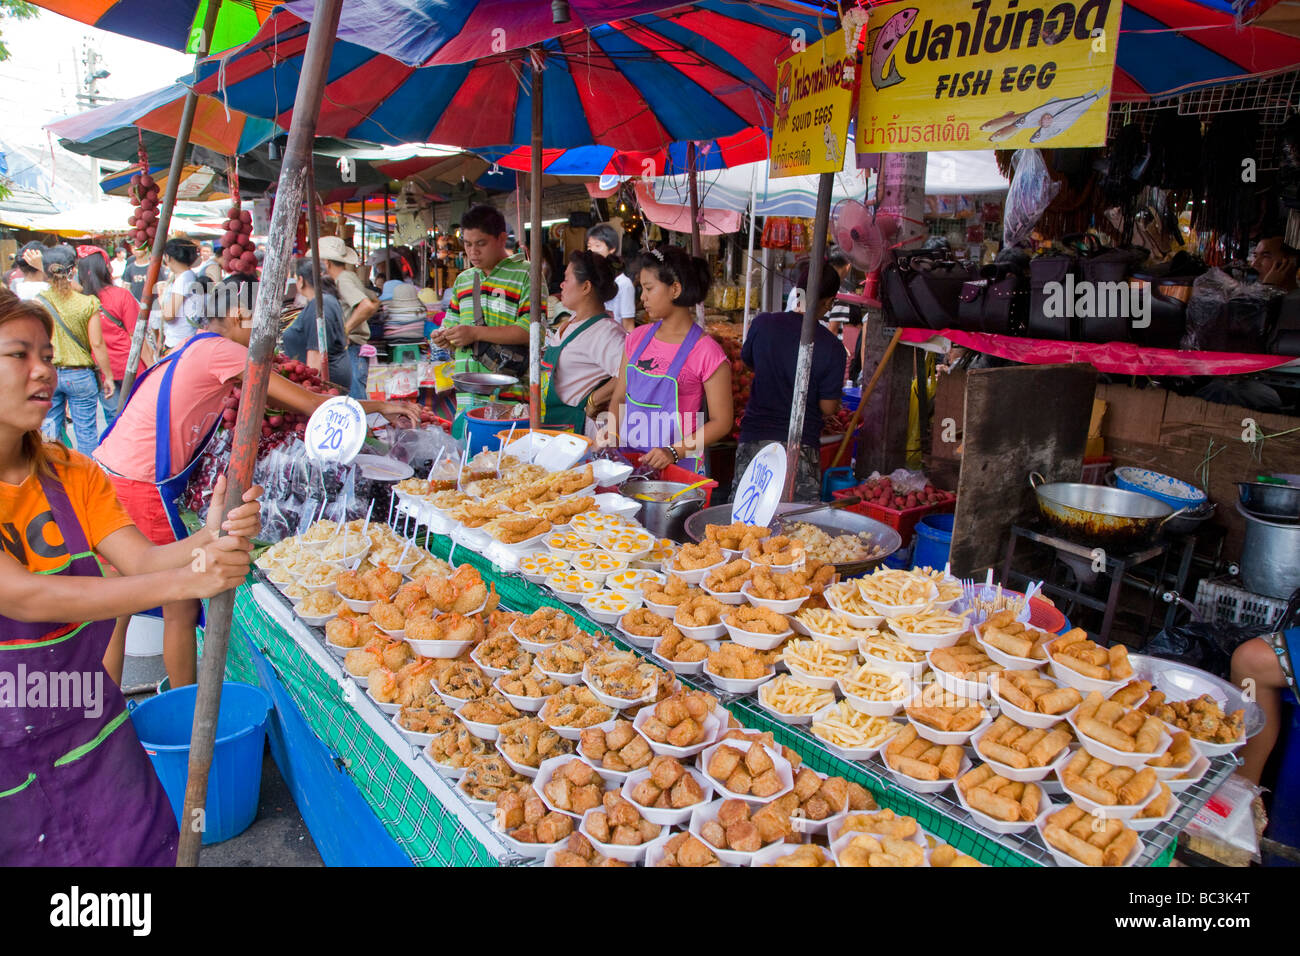 Thai market food stall Stock Photo: 24667128 - Alamy